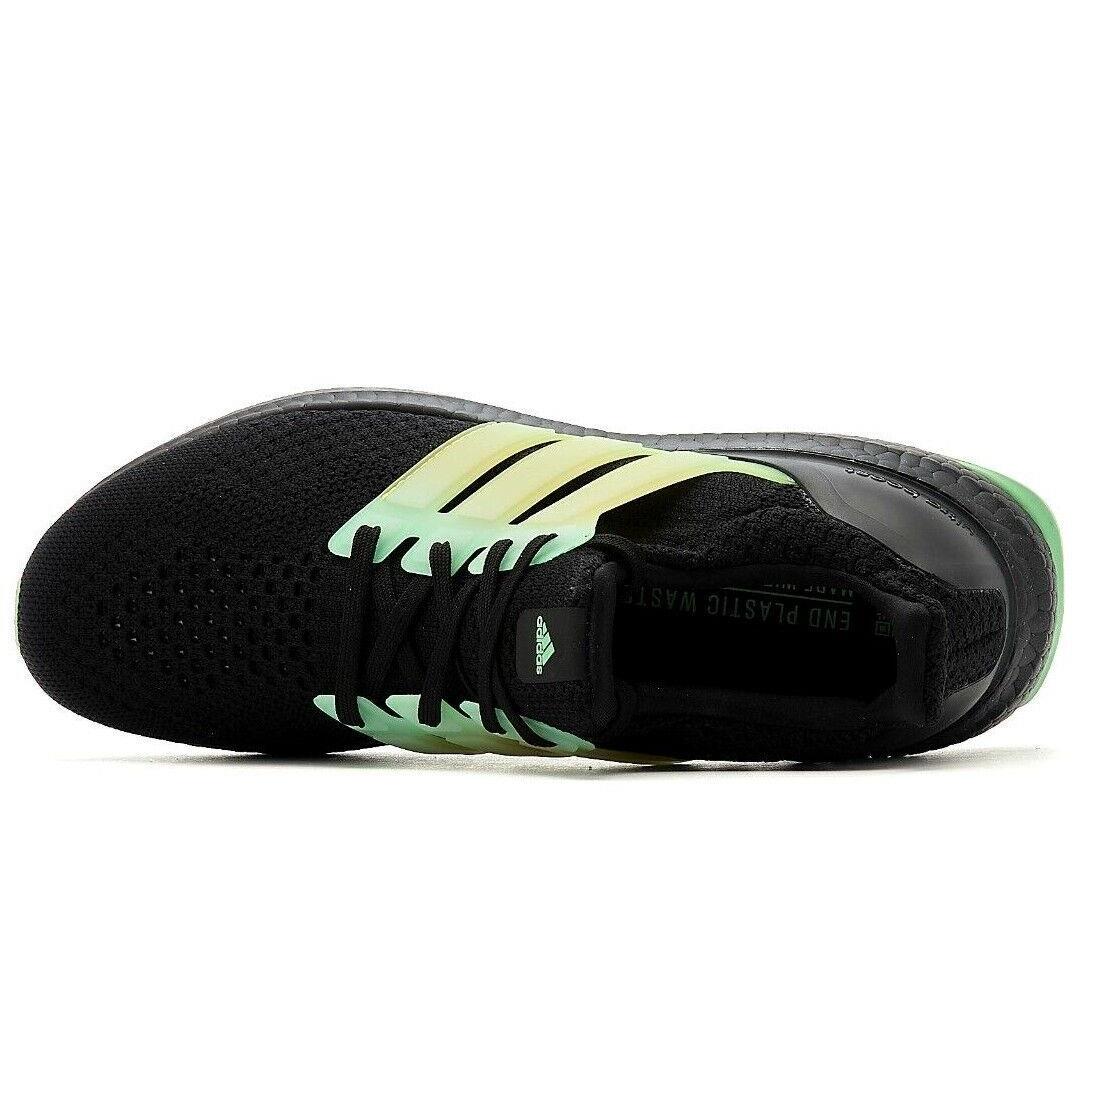 Adidas shoes UltraBoost - Black 1